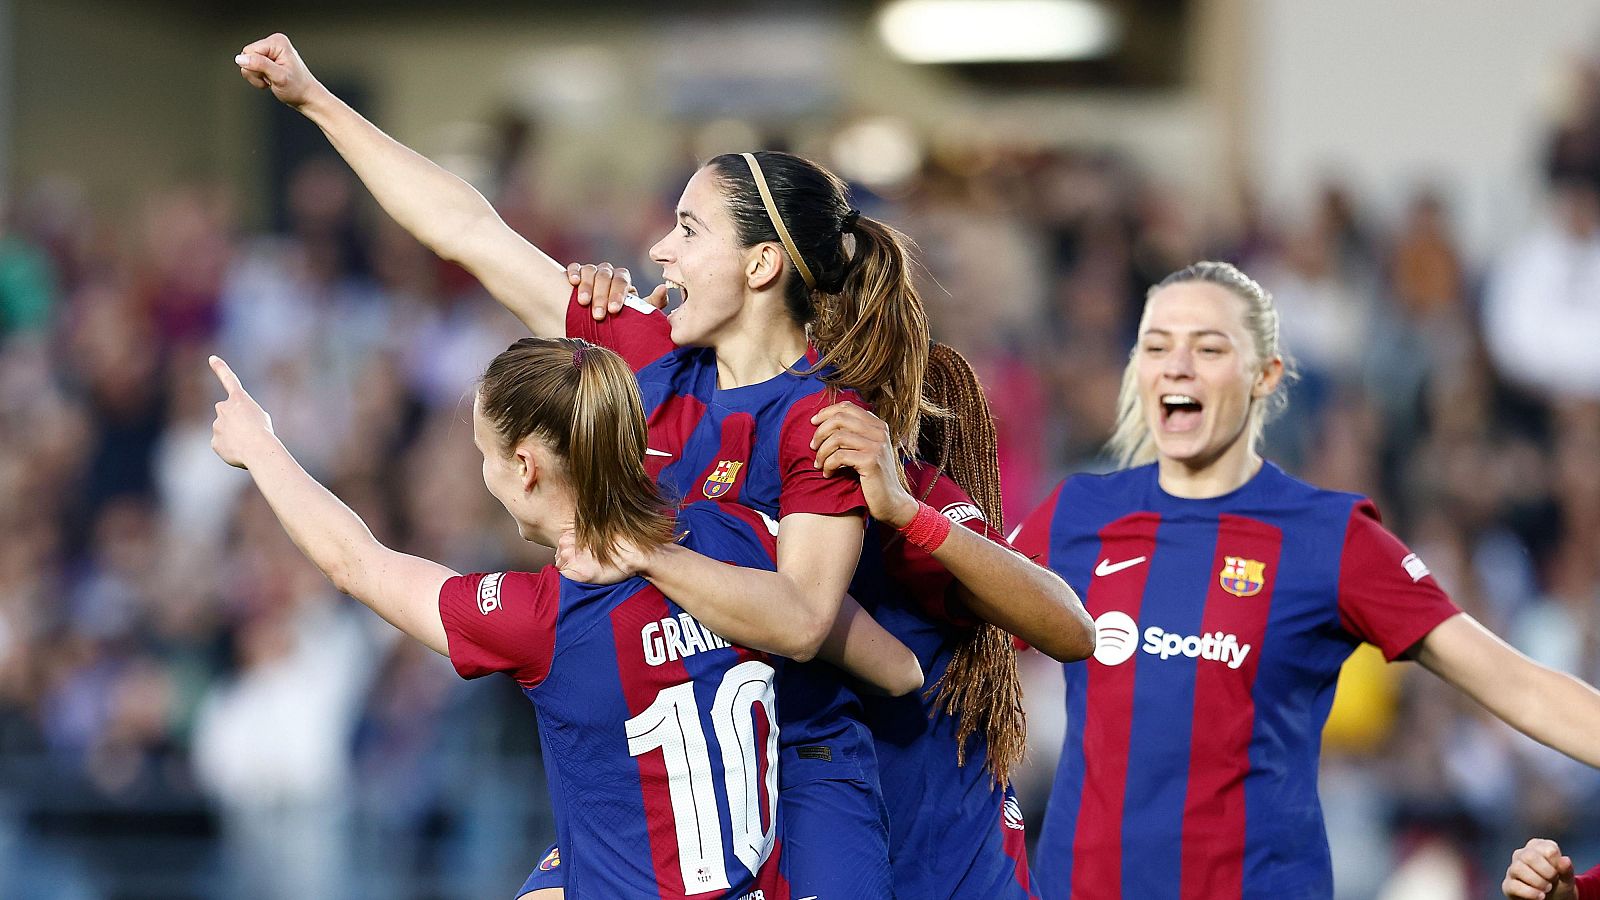 Aitana Bonmatí anota el primer gol del partido al Brann